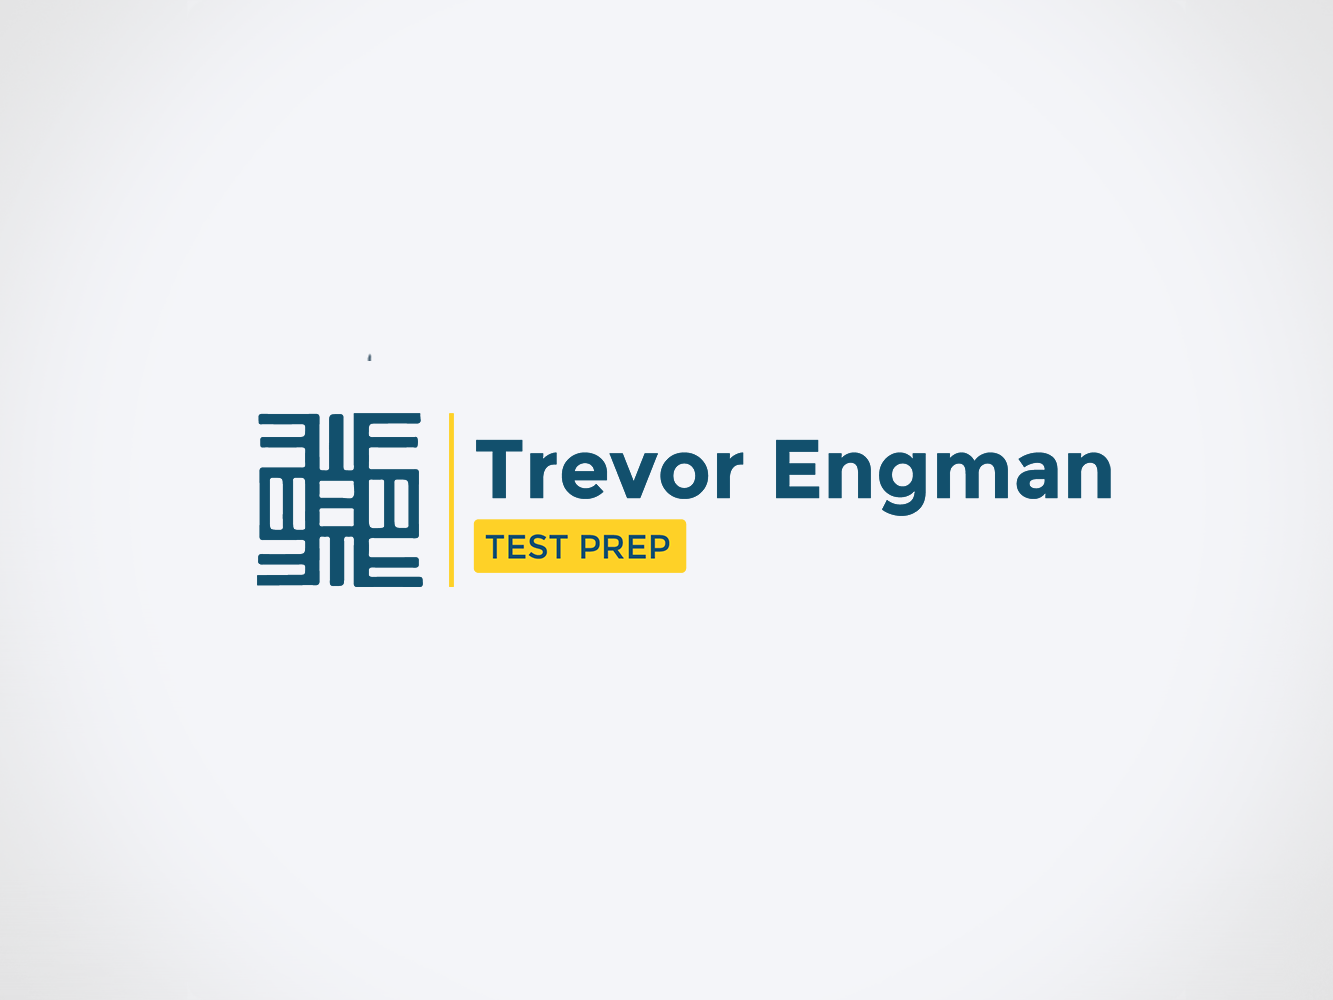 Trevor-Engman_Mockup_0